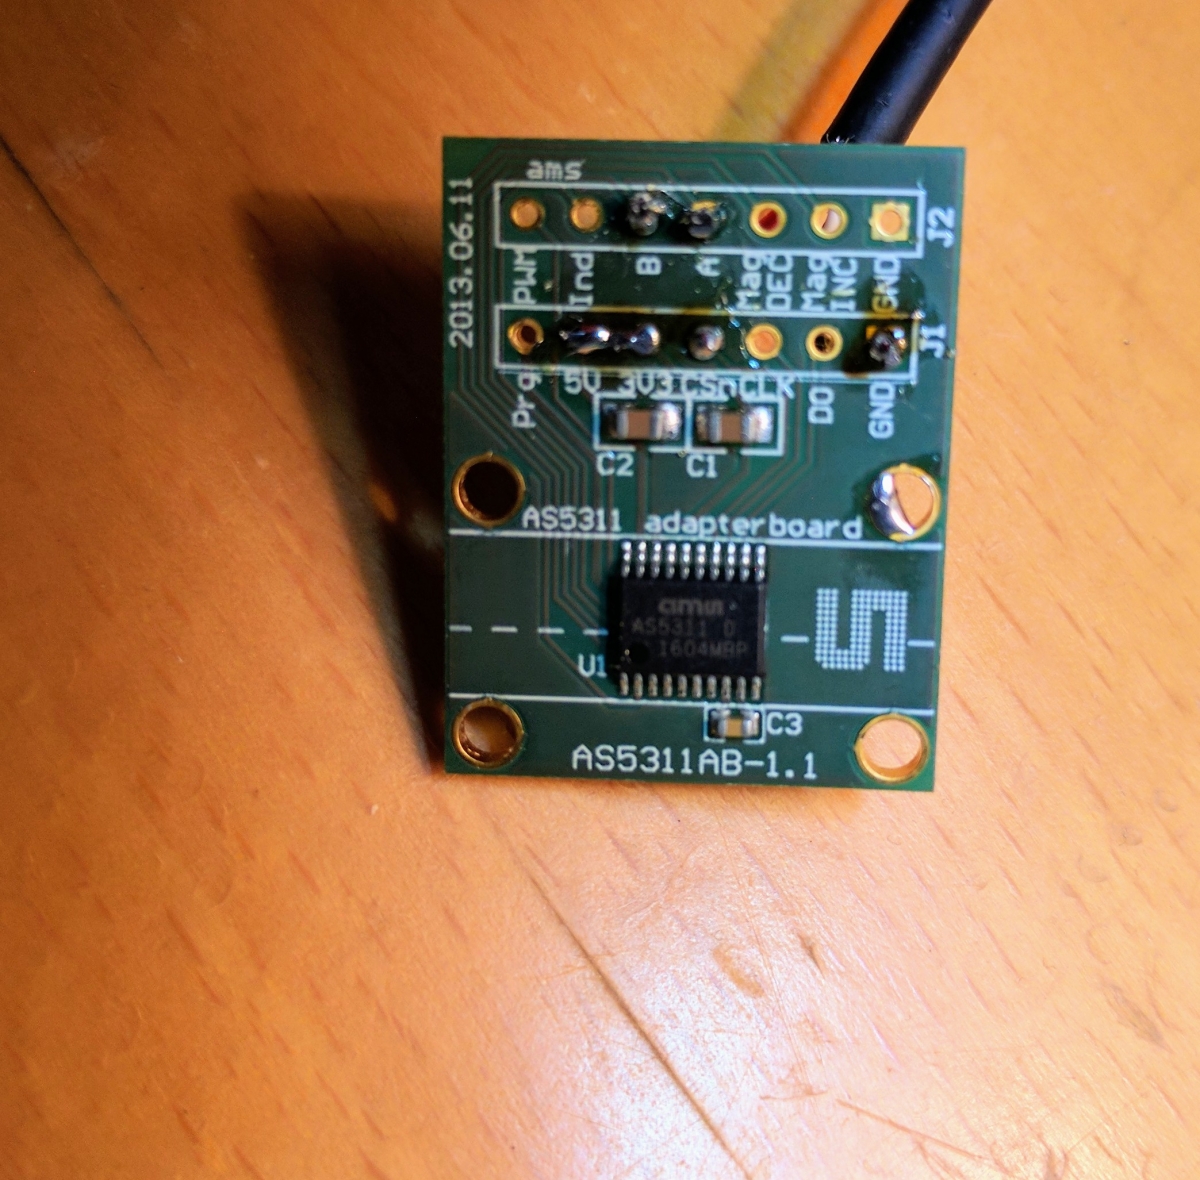 Das Sensorboard AS5311-TS_EK_AB mit dem USB-Kabel verlötet